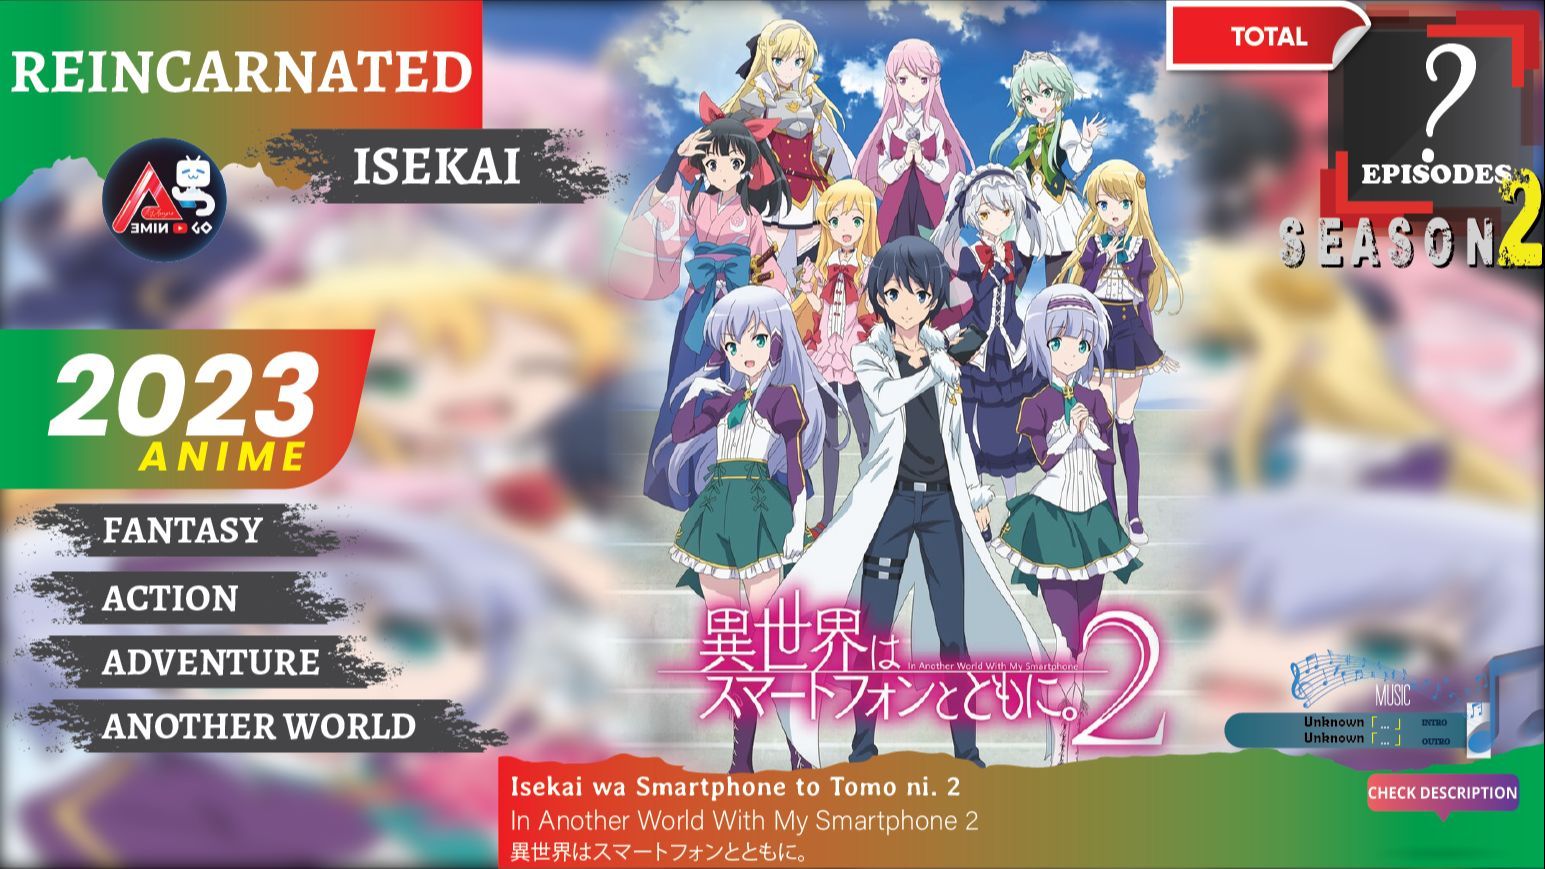 Isekai wa Smartphone Season 2 Release Date Announced! 